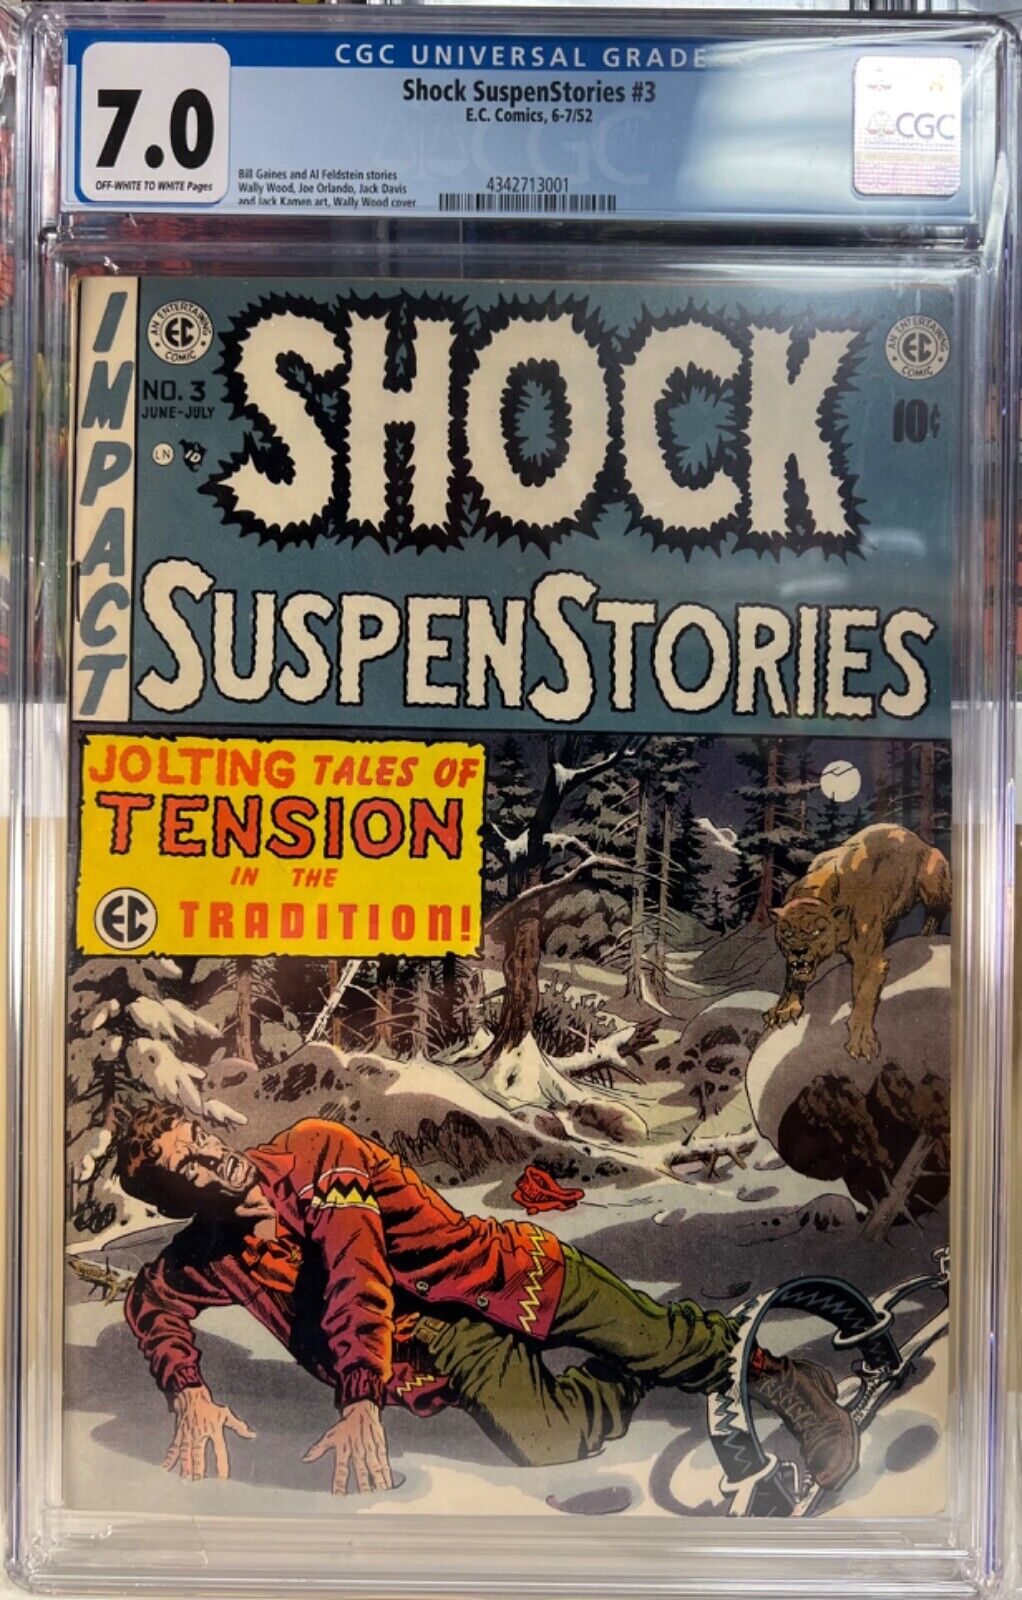 Shock SuspenStories #3 - CGC 7.0 FN/VF OW/W Decapitated head panel (1952)